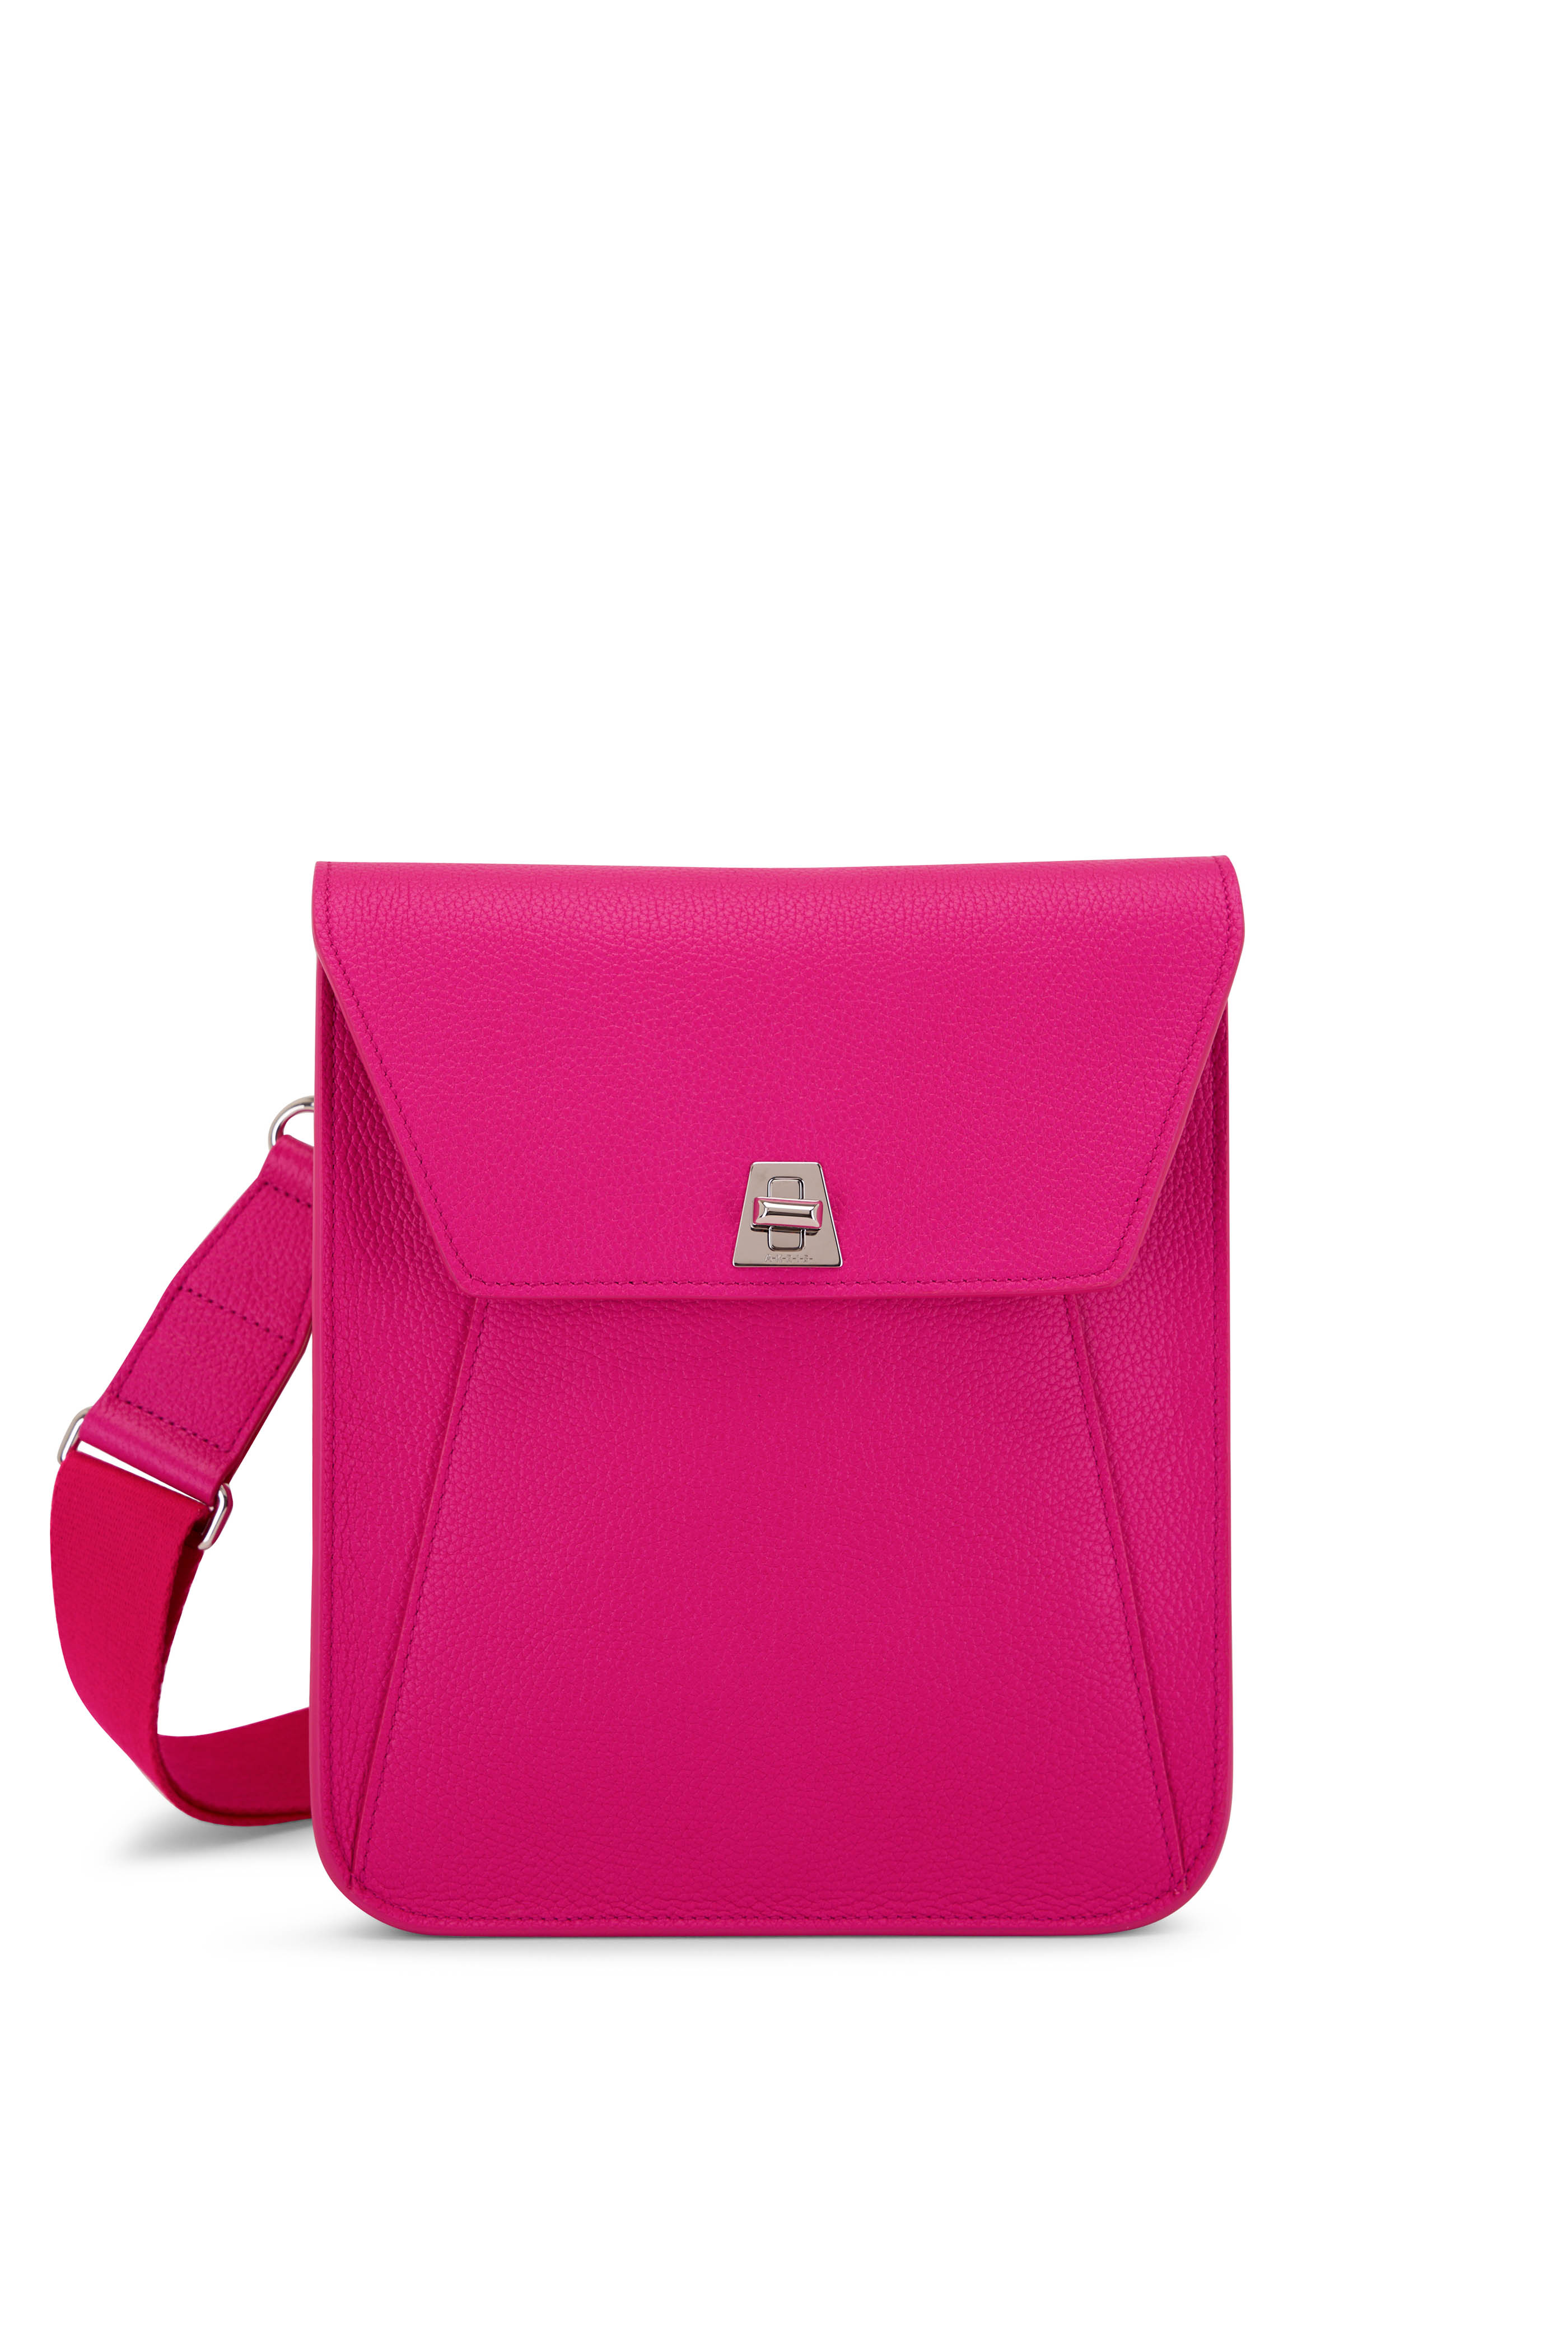 PRADA: shoulder bag in saffiano leather - Red  Prada crossbody bags 1MA022  053 online at